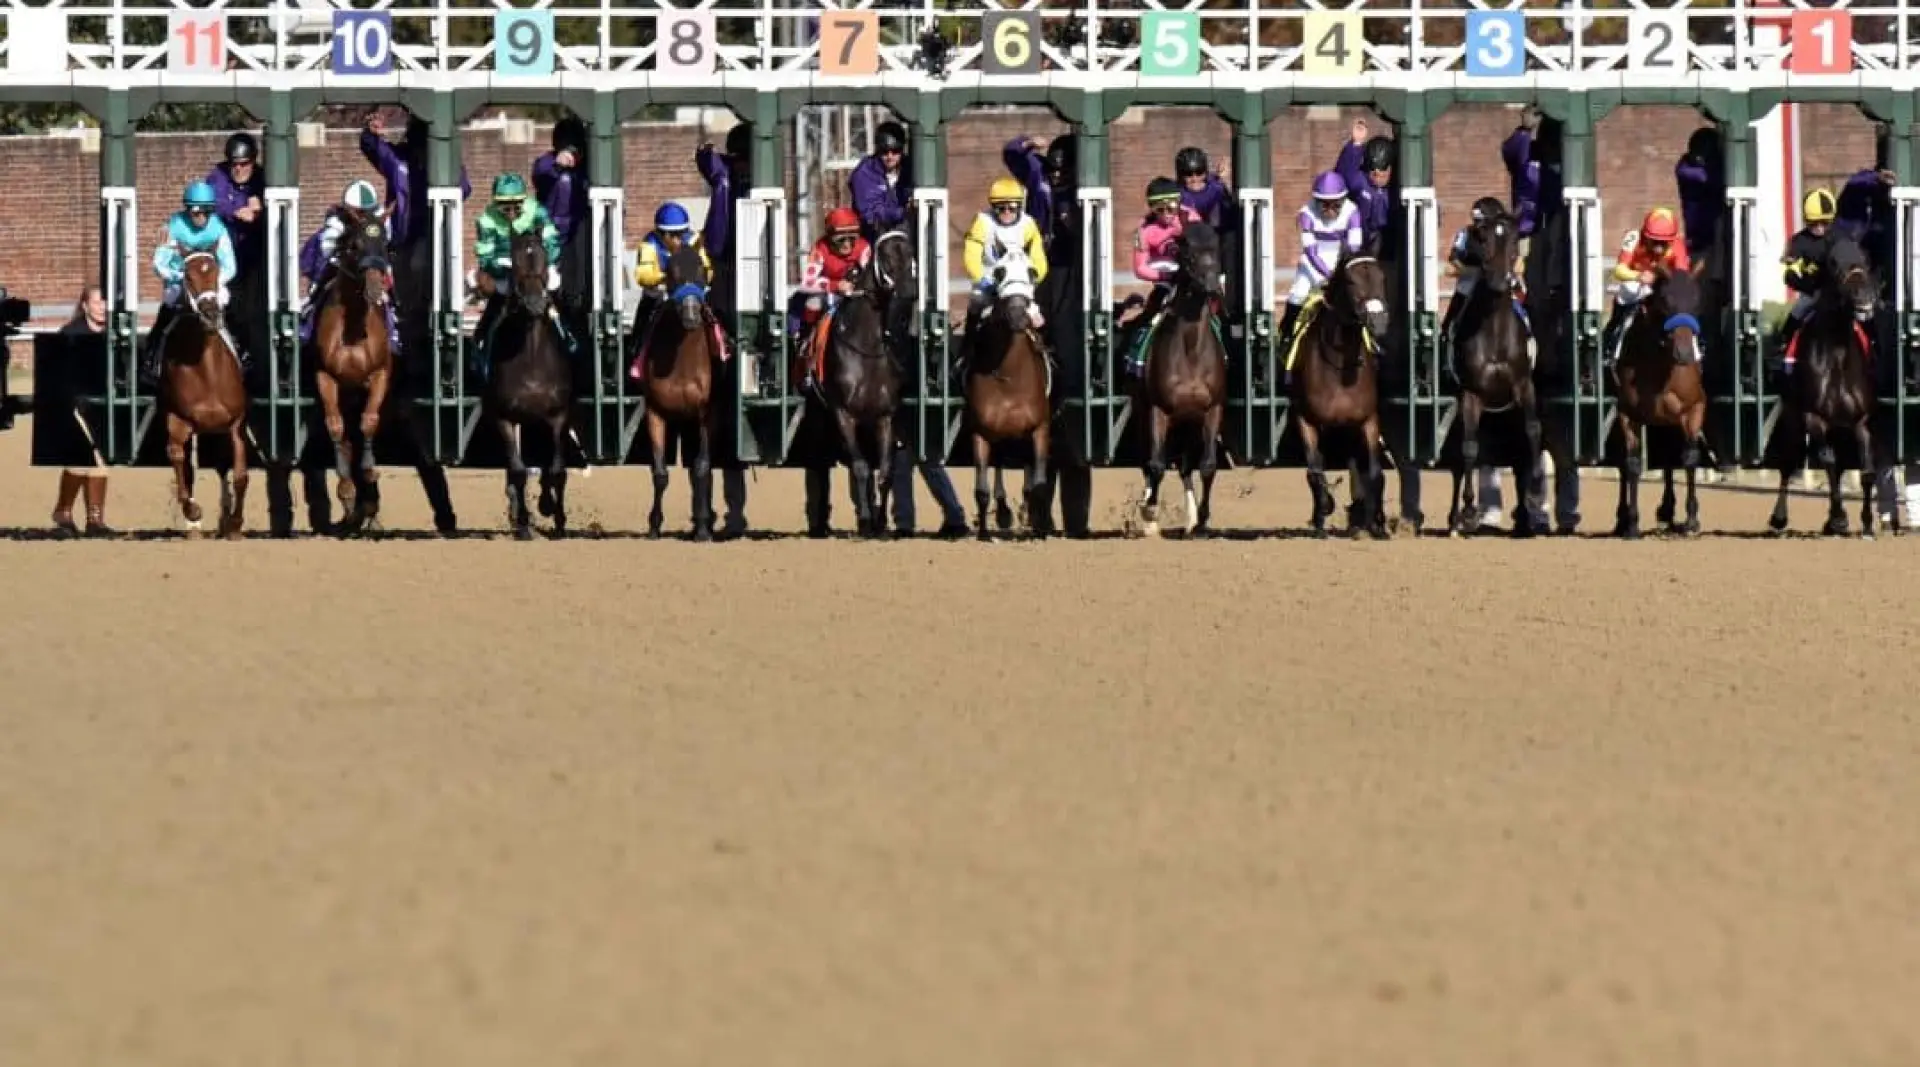 Horse Racing stalls, Breeders' Cup